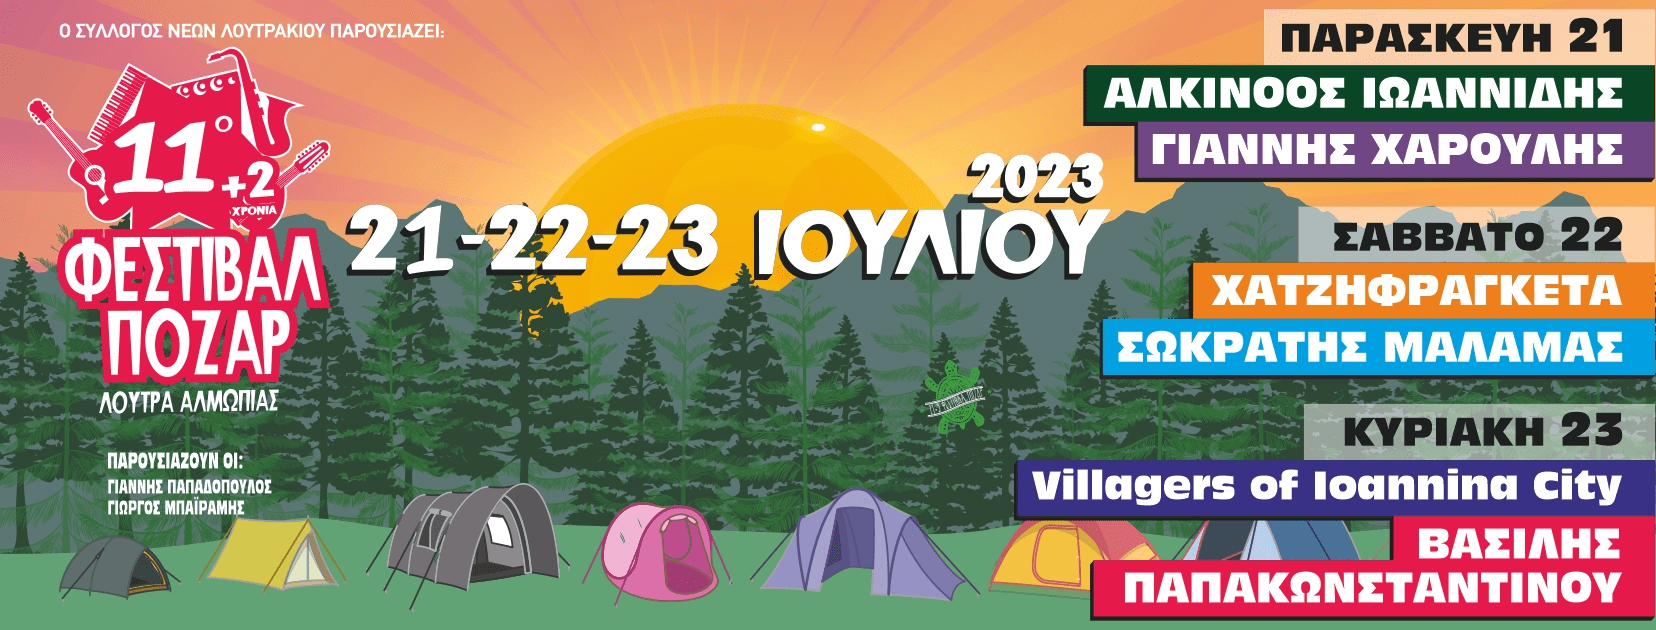 11o (+2) Φεστιβάλ Πόζαρ:  21-23 Ιουλίου 2023 - επιστρέφει και θα είναι εκρηκτικό!